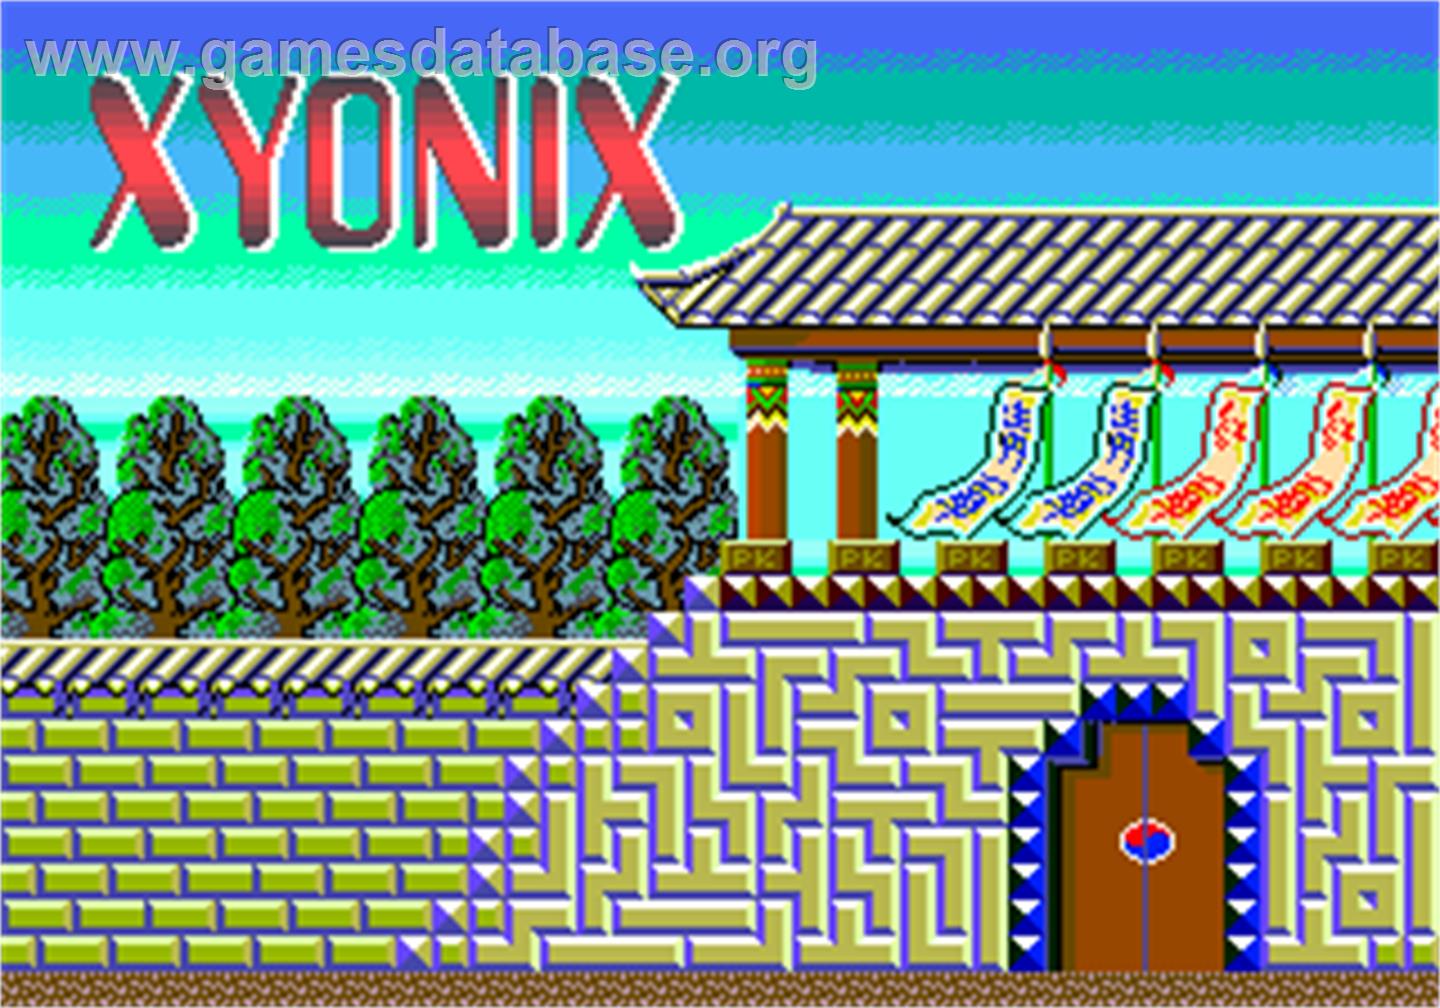 Xyonix - Arcade - Artwork - Title Screen